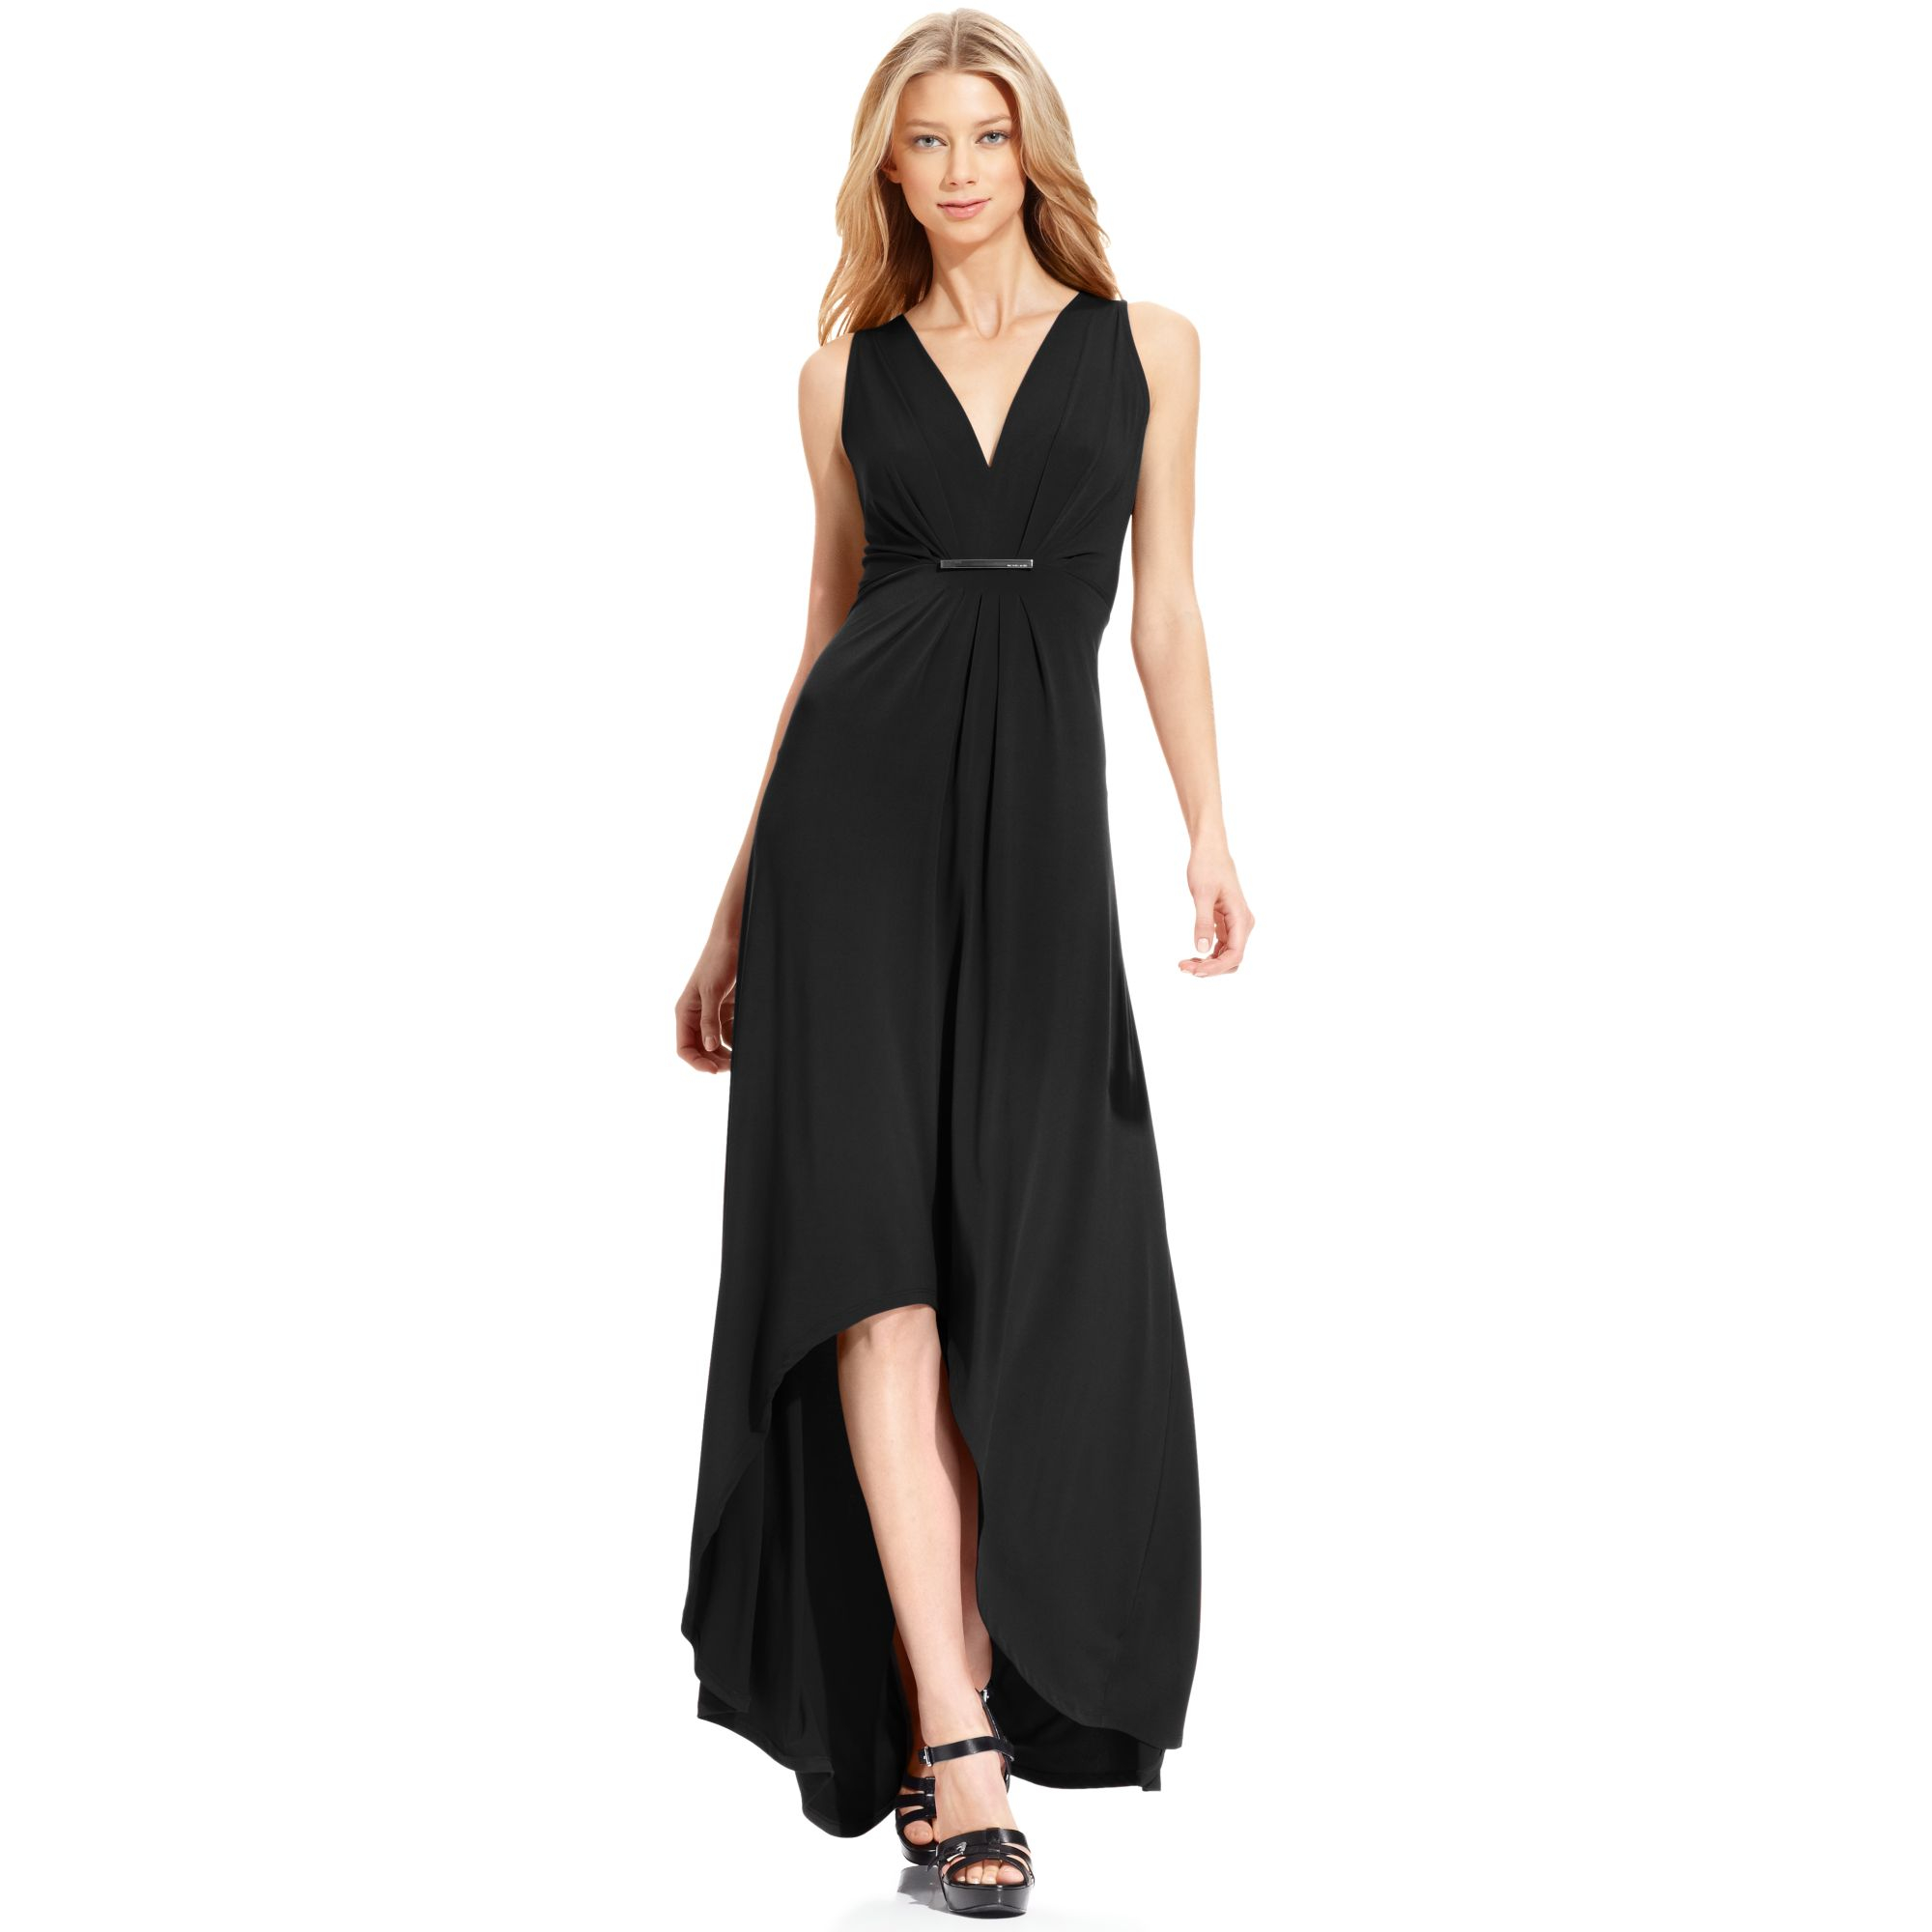 Lyst - Michael Kors Sleeveless High Low Maxi Dress in Black